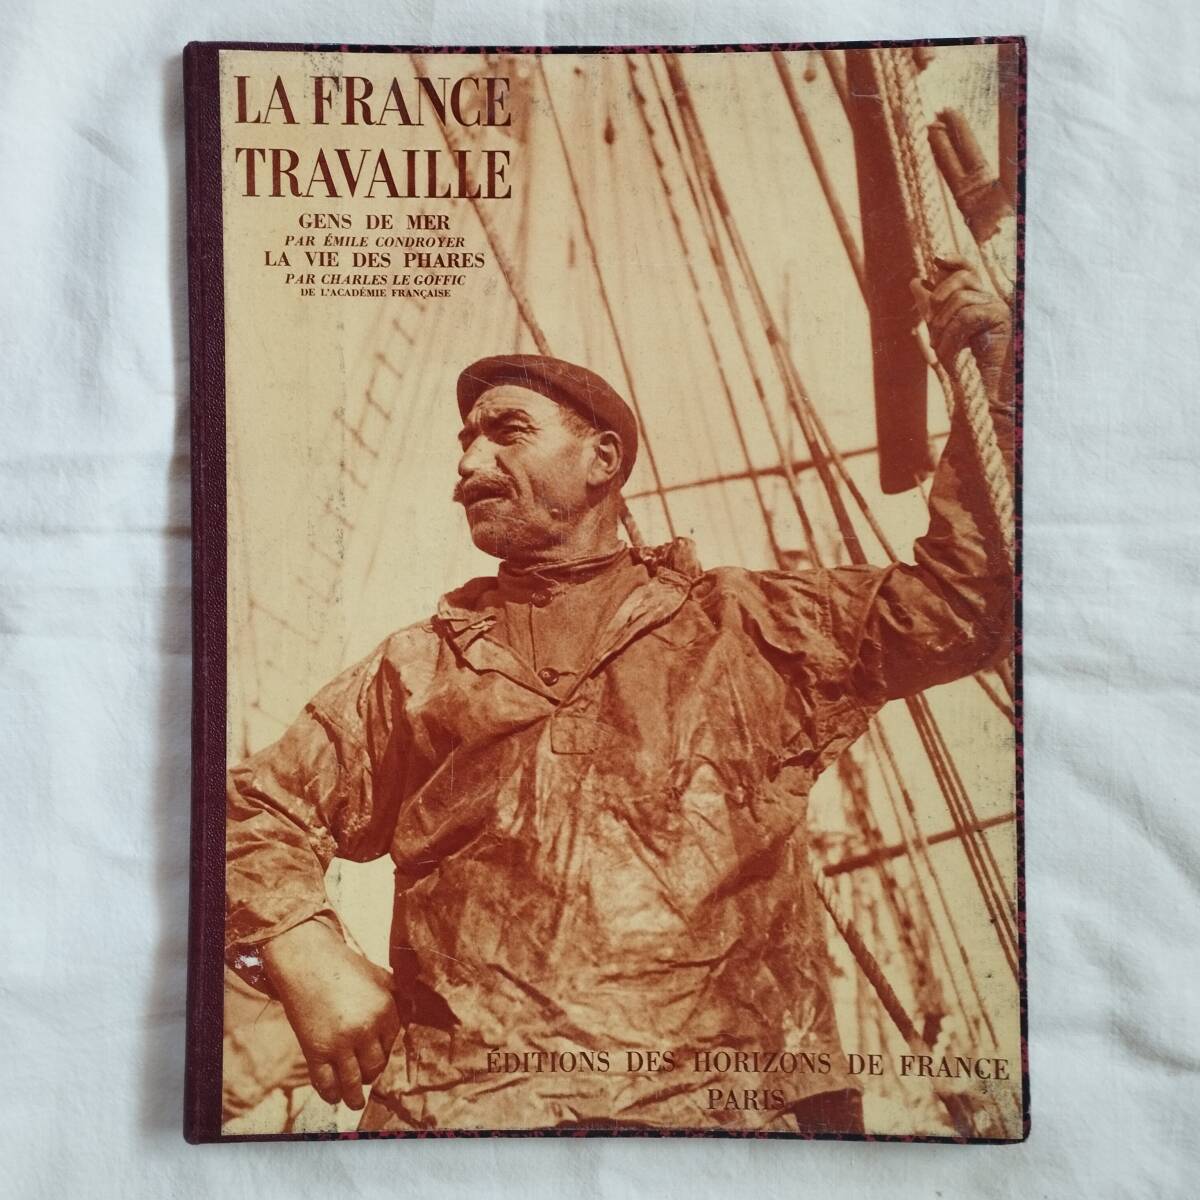 LA FRANCE TRAVAILLE no. 4 шт GENS DE MER, LA VIE DES PHARES( судно езда, лампа шт. .) евро Vintage Work одежда античный старинная книга старая книга 